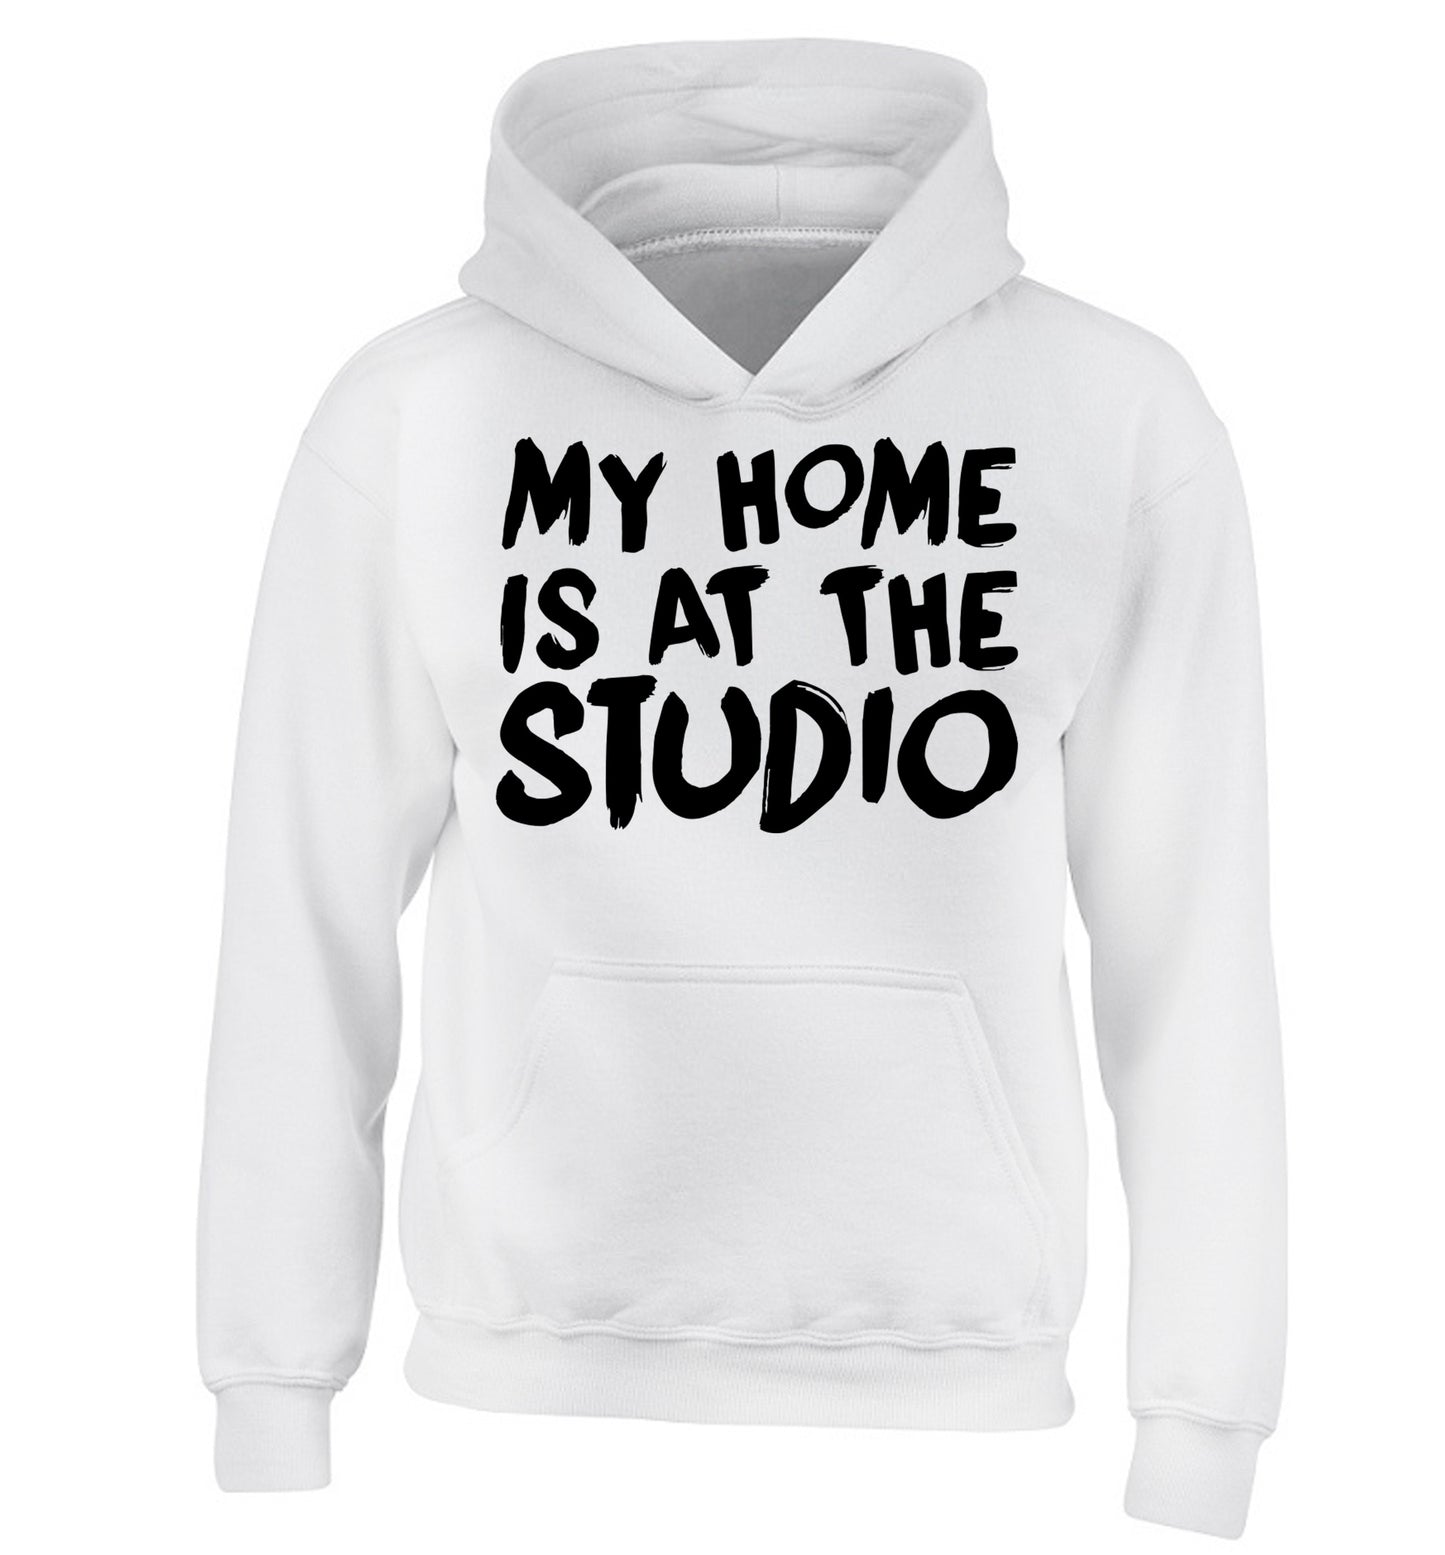 My home is at the studio children's white hoodie 12-14 Years